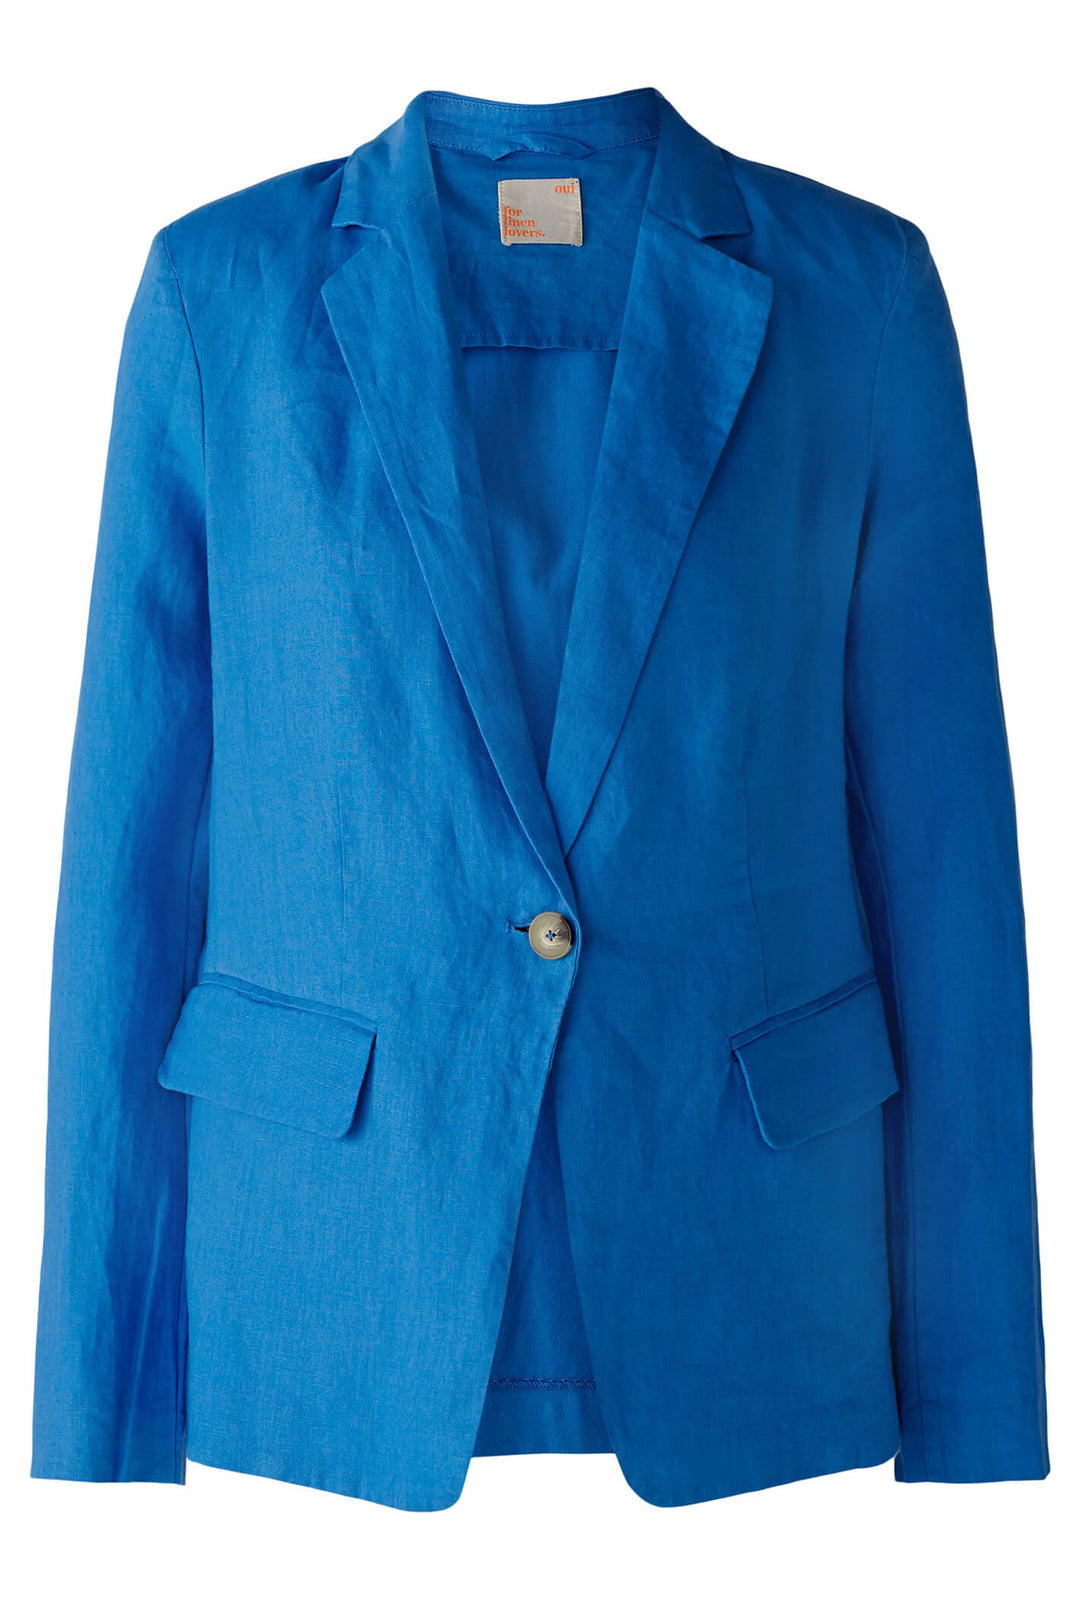 Oui 78459 Blue One Button Linen Jacket - Olivia Grace Fashion